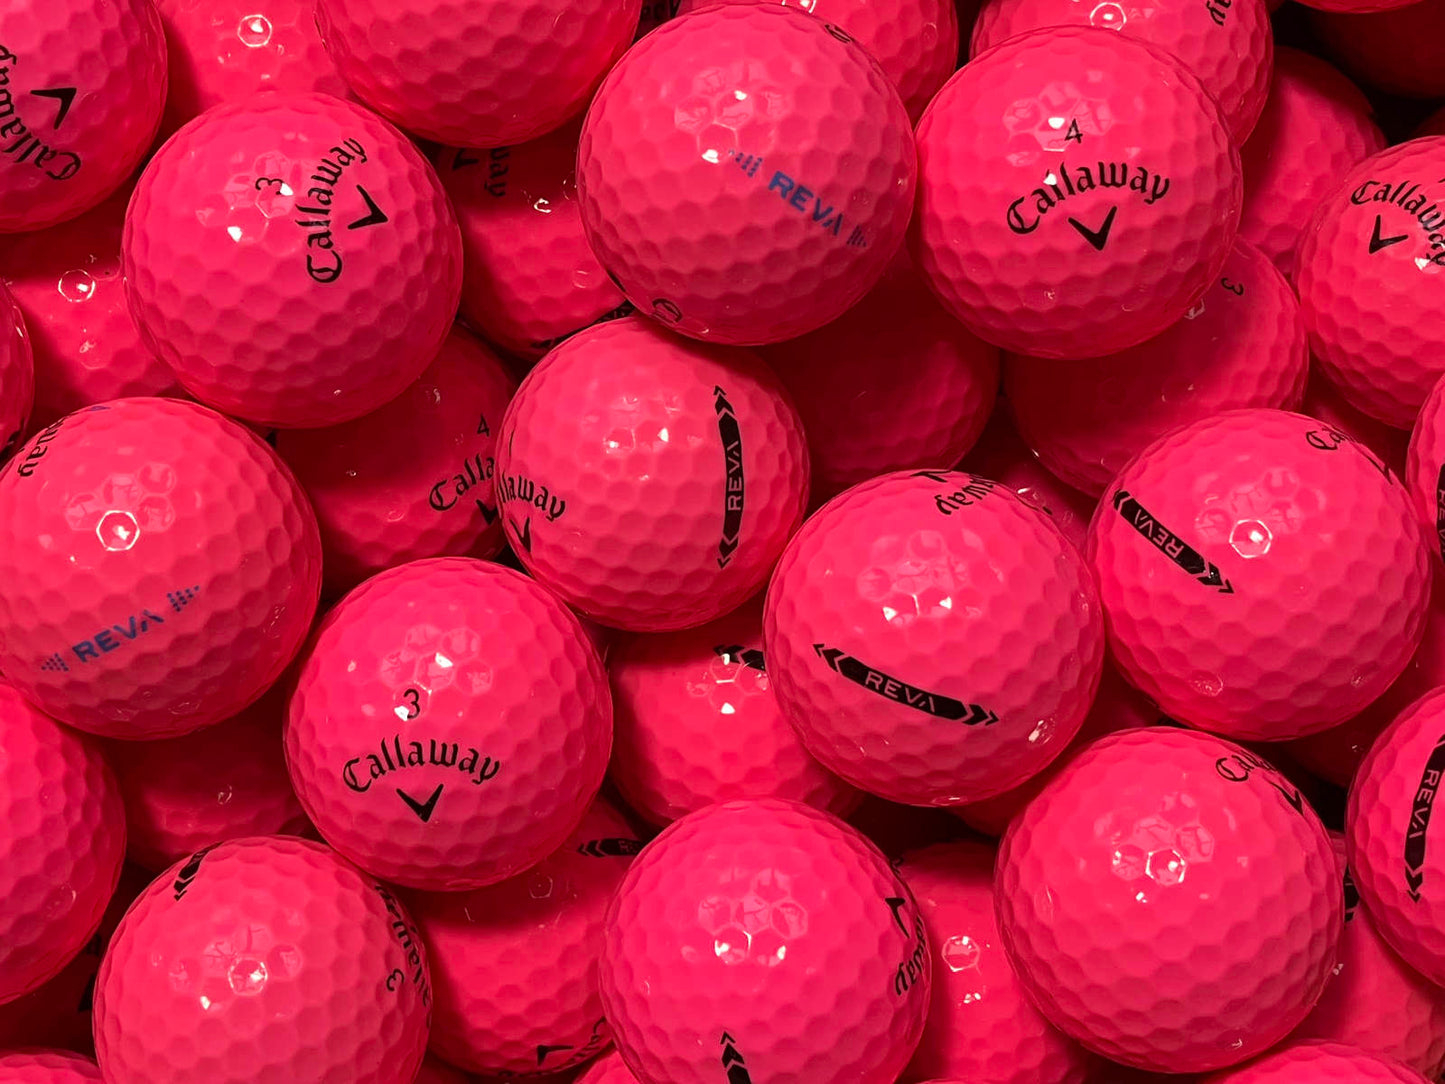 Callaway REVA Pink Lakeballs - gebrauchte REVA Pink Golfbälle AAAA-Qualität